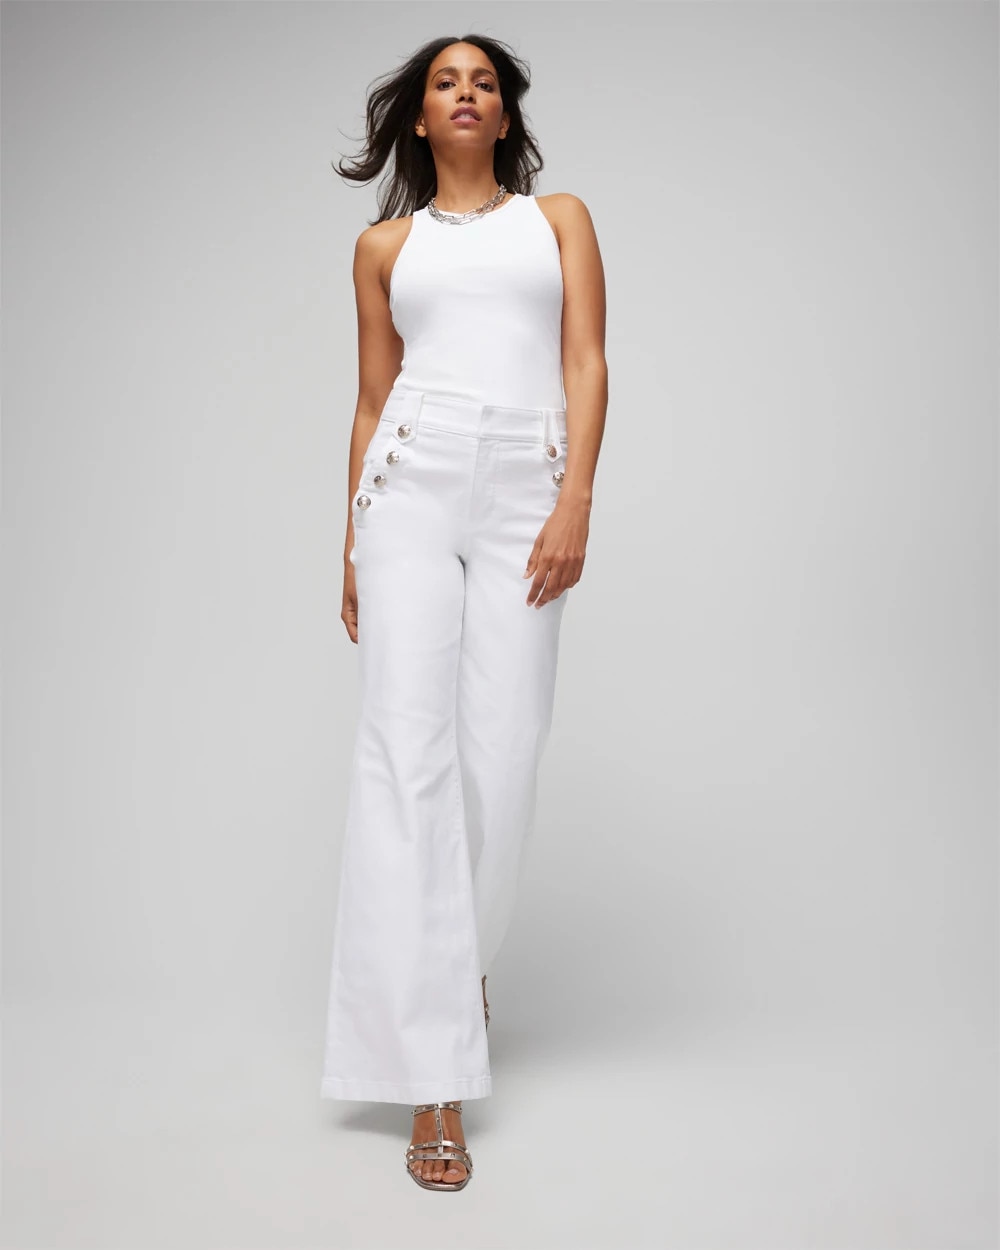 Women's White Silk Dress Shirt, White Wide Leg Pants, Light Blue Leather  Pumps, White Leather Crossbody Bag | Lookastic